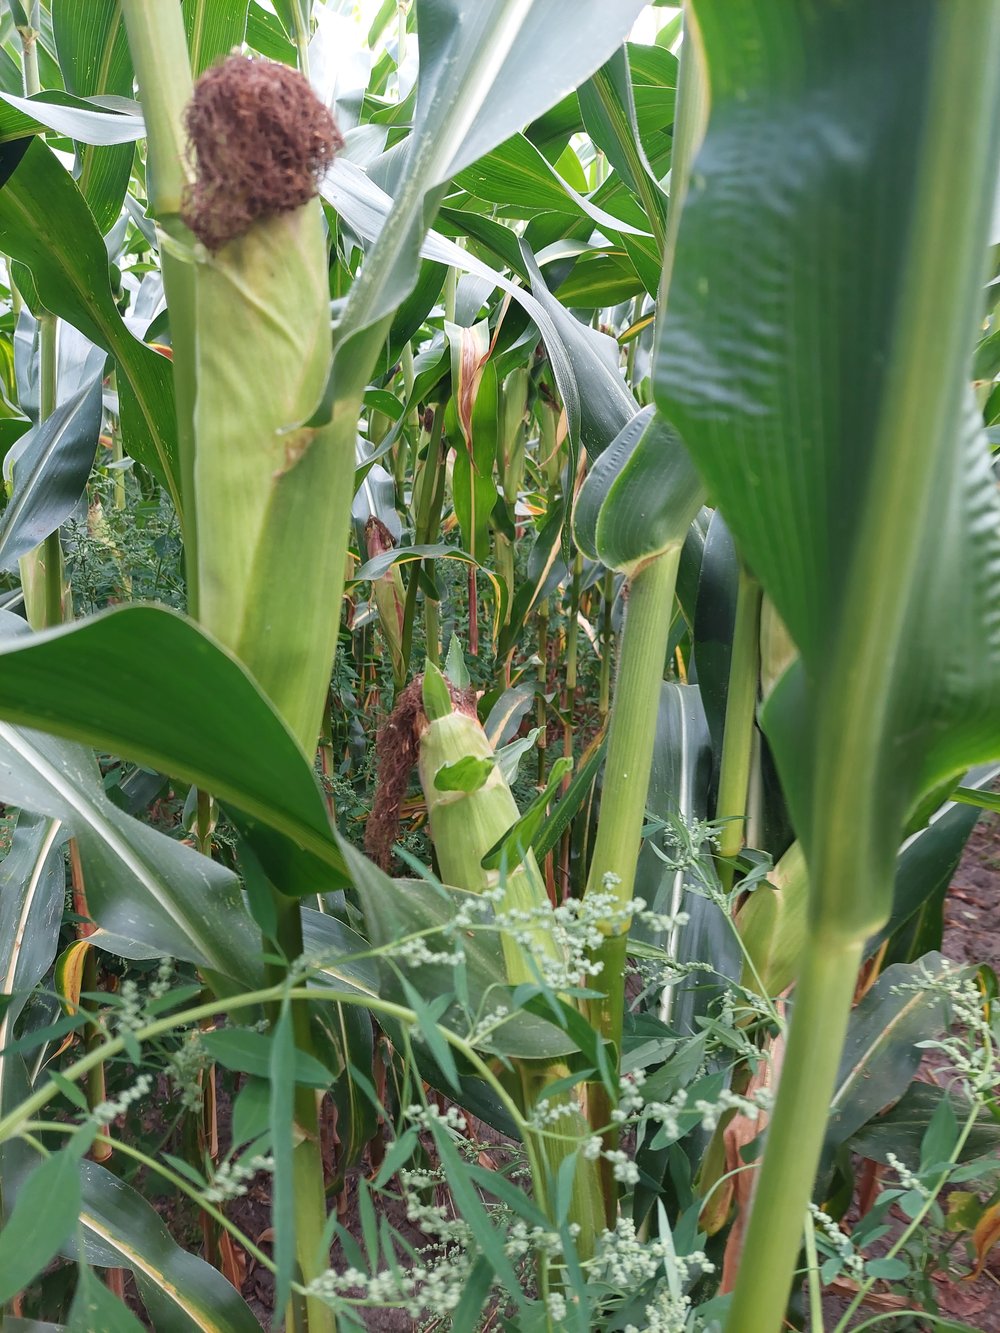 Figure (5): Maize2, good maize, ground photo, 27th August 2022